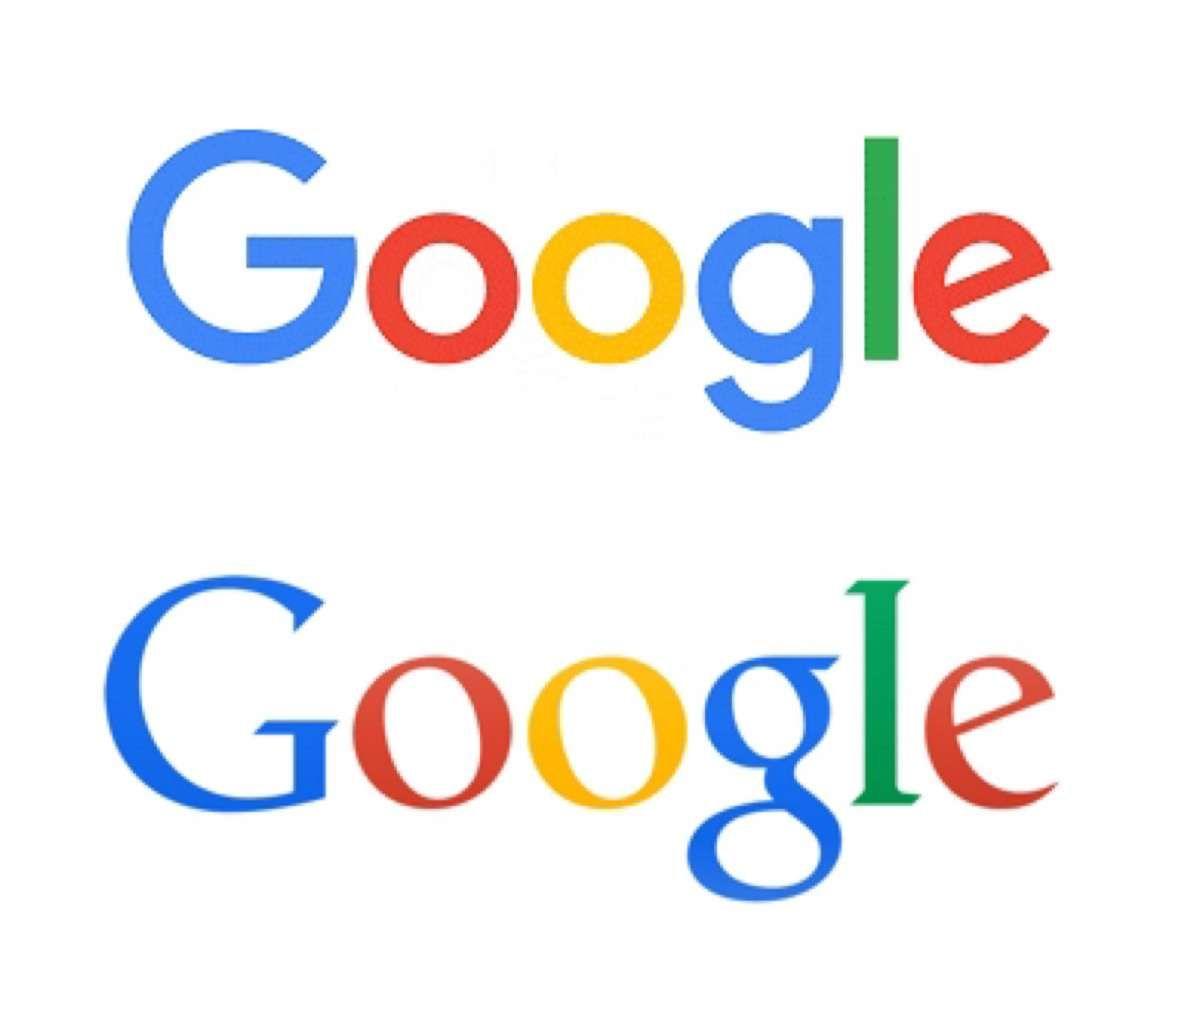 Old and New Logo - Google - New Logo vs. Old Logo